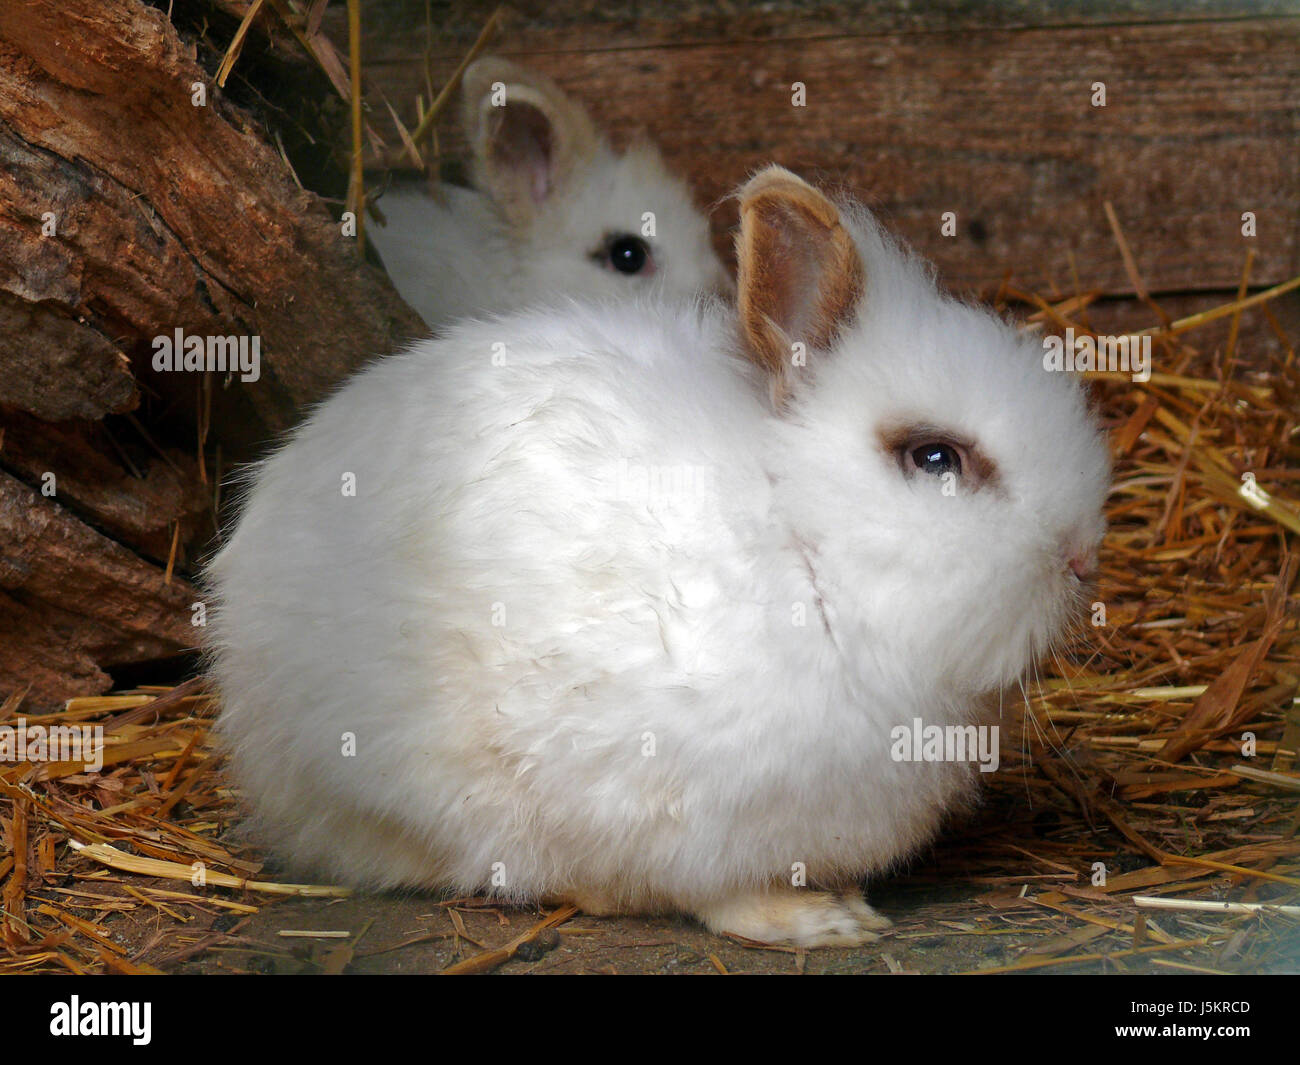 agriculture farming zoo blank european caucasian skin easter rabbit hare dear Stock Photo